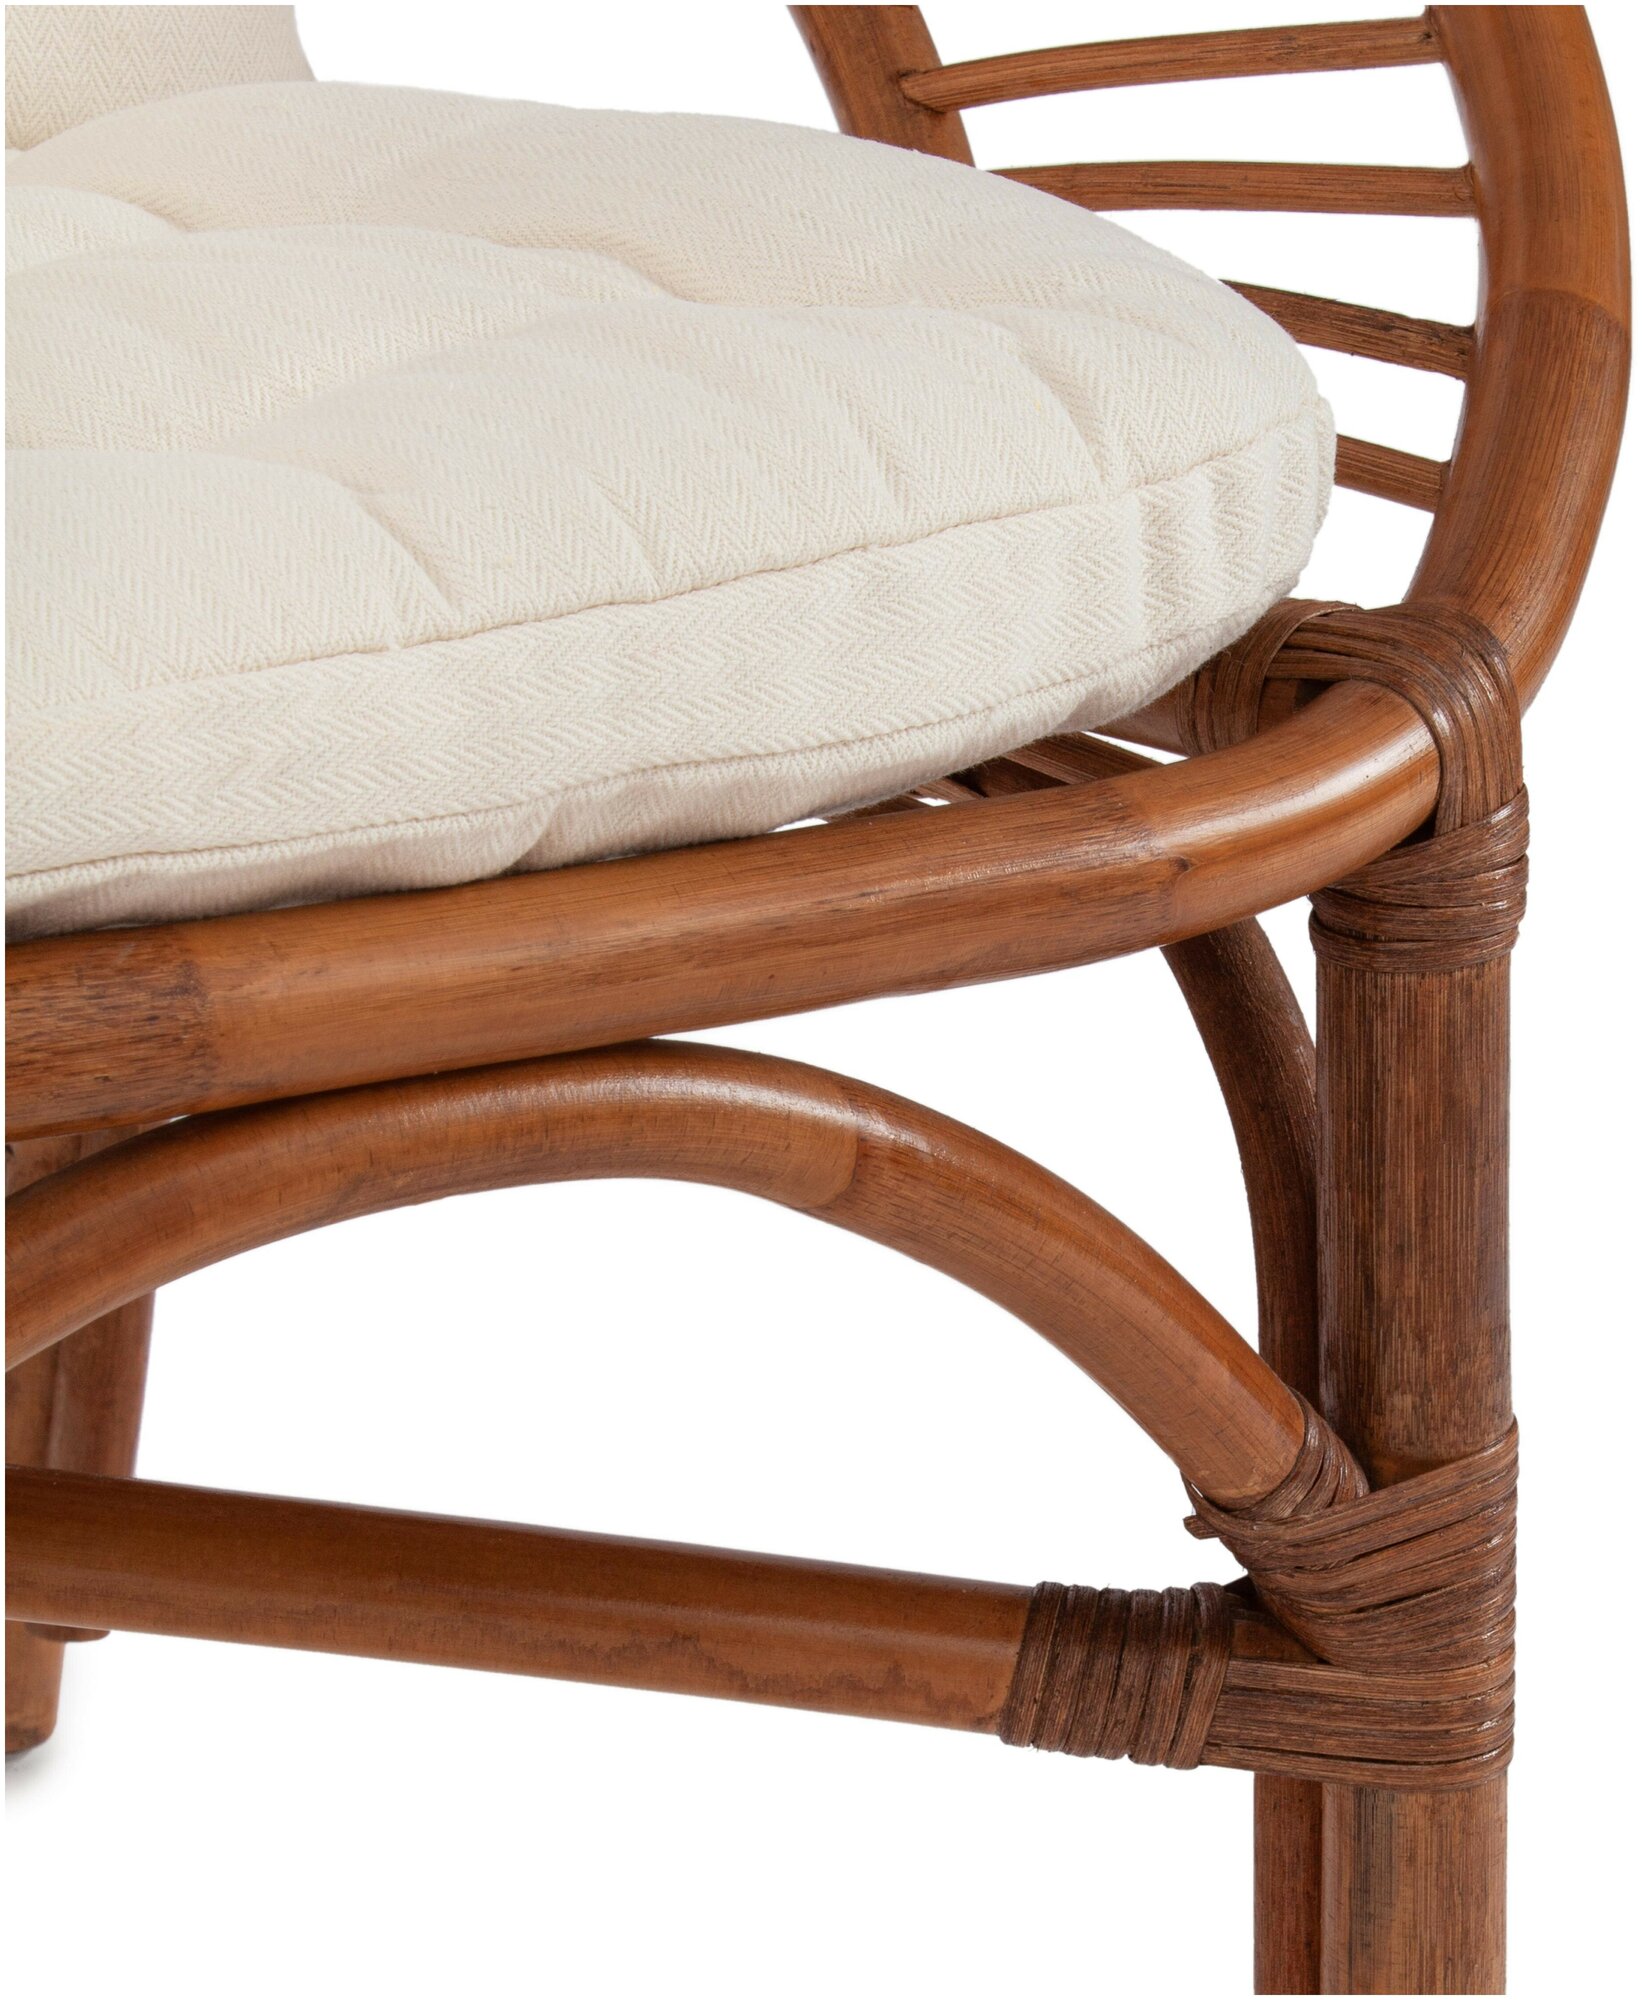 Комплект для отдыха TetChair TURKEY (стол круглый (со стеклом)+2 кресла + диван) /с подушками/ротанг, кр:70х65х78см, дв:120х65х78см, ст:D50х56,5см, coco brown (коричневый кокос) - фотография № 9